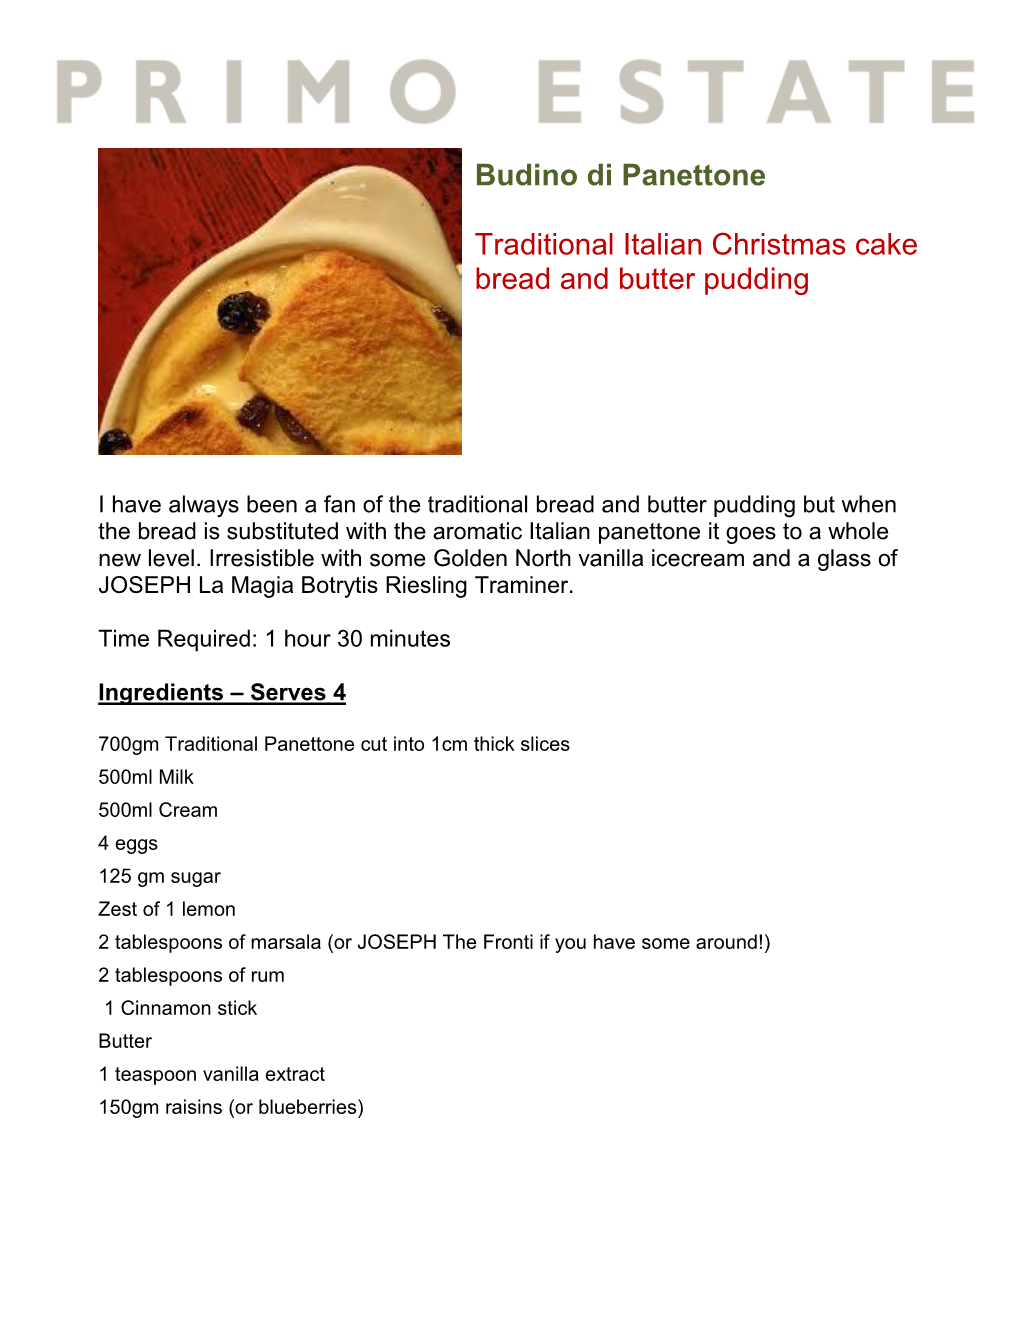 Budino Di Panettone Traditional Italian Christmas Cake Bread and Butter